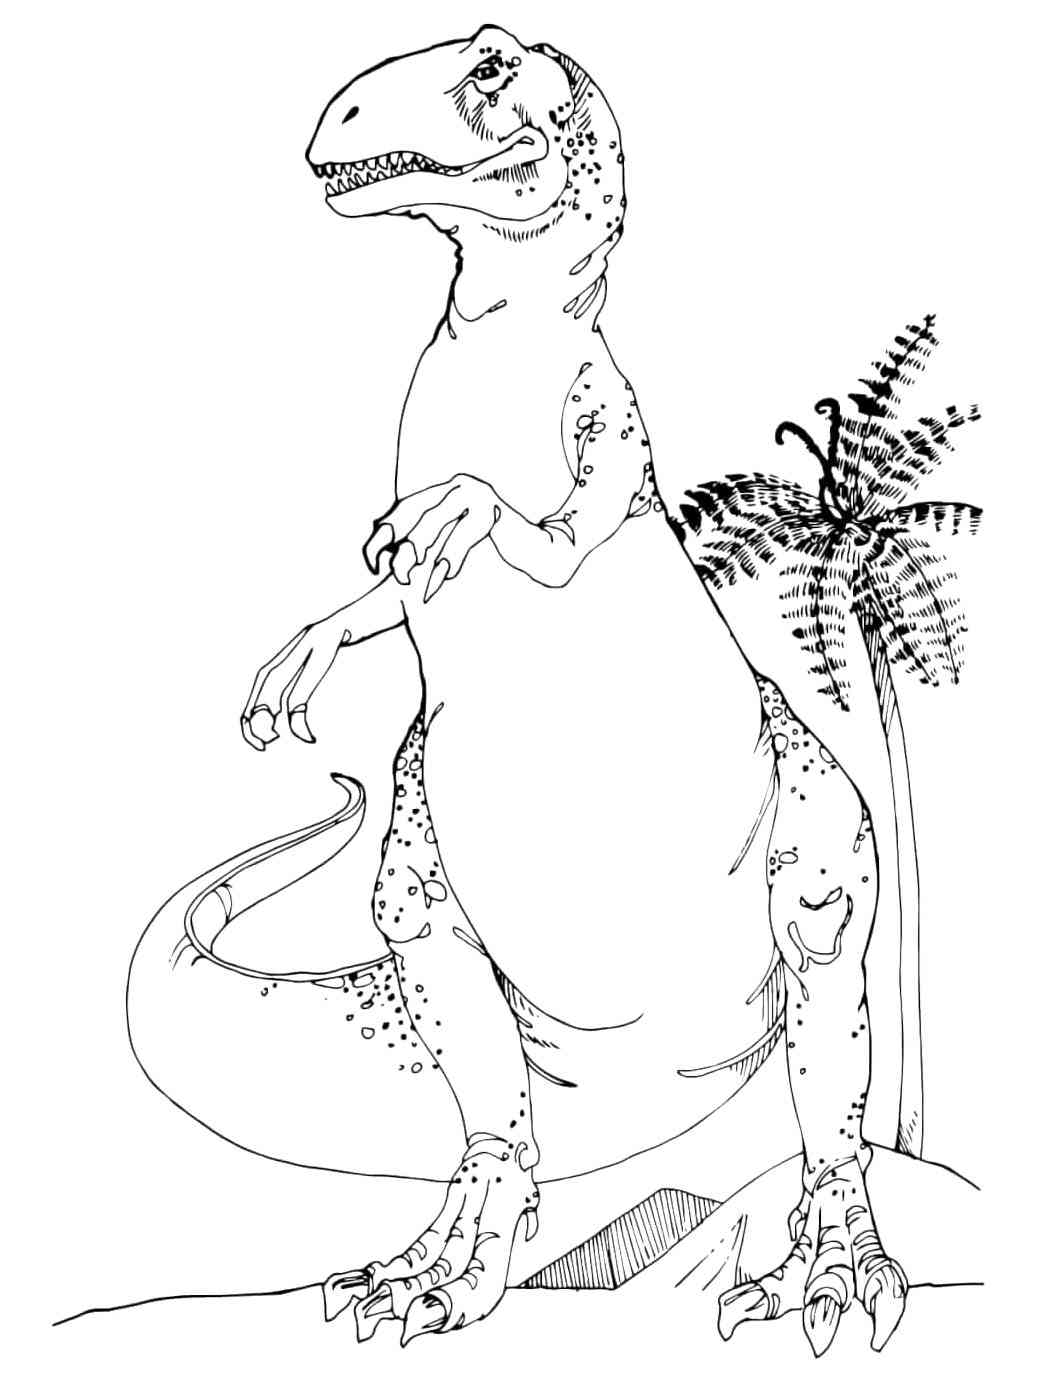 Predatory Allosaurus coloring page